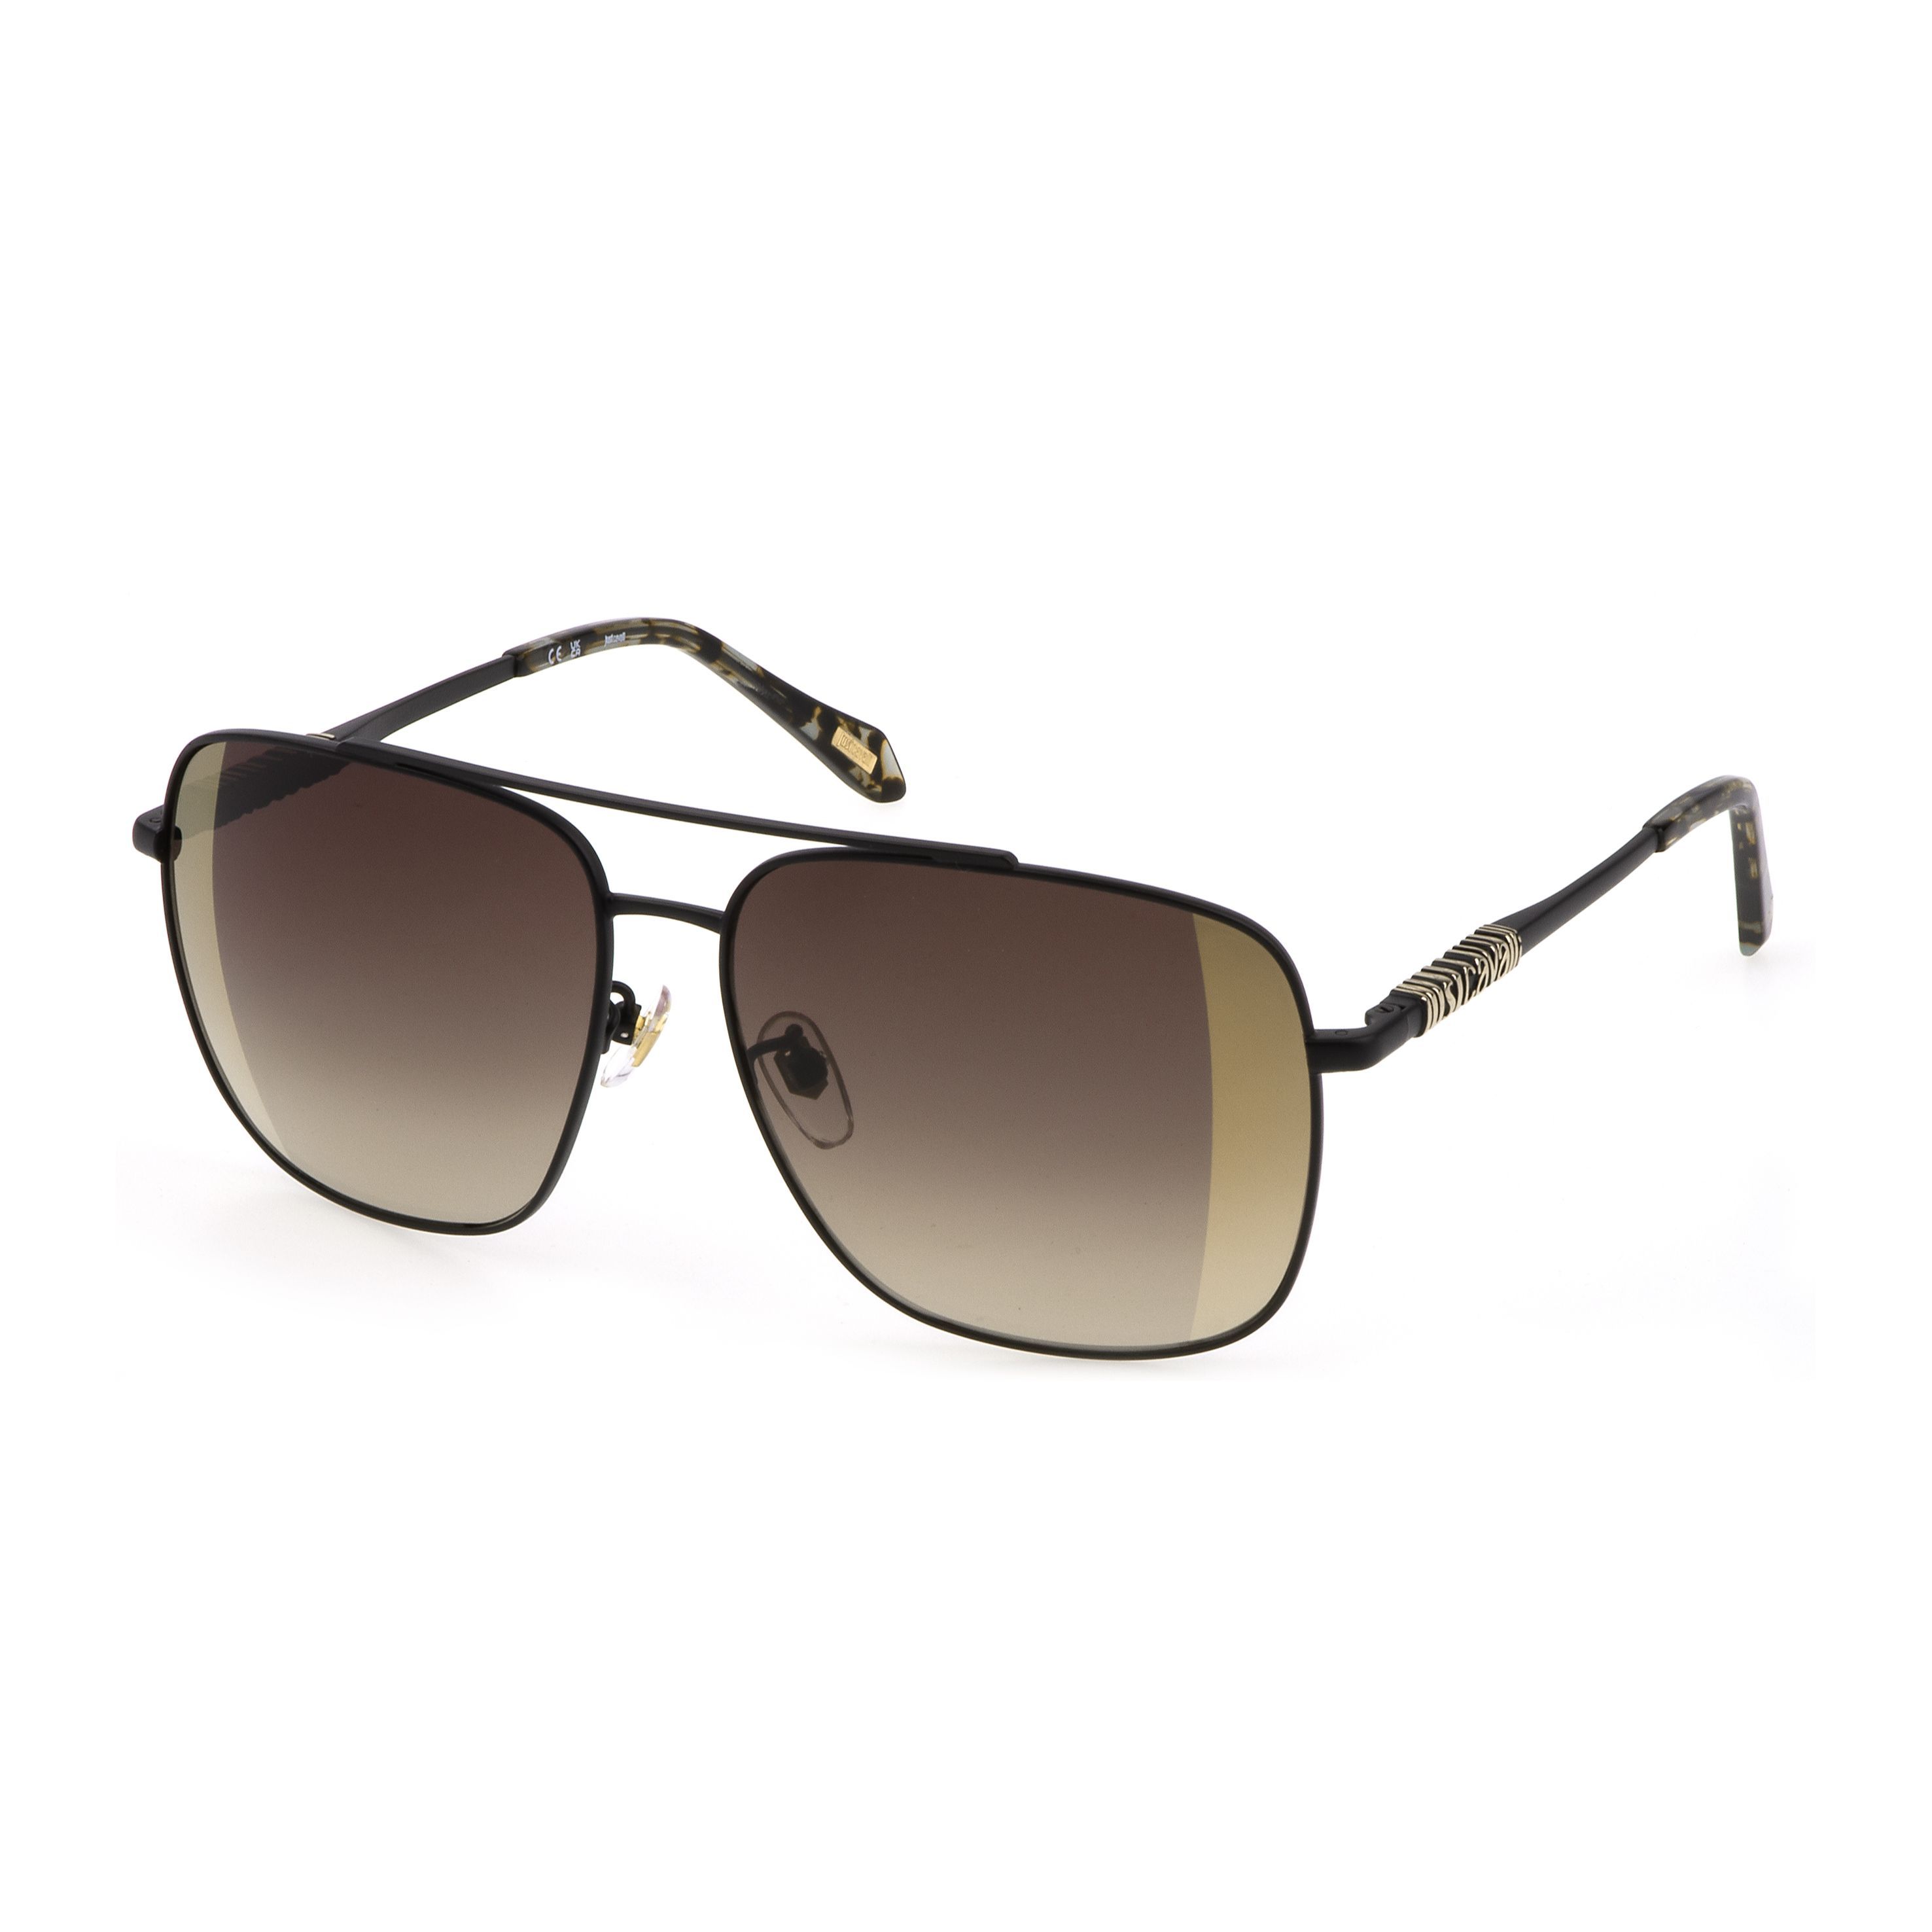 SJC030 Square Sunglasses 305G - size 61